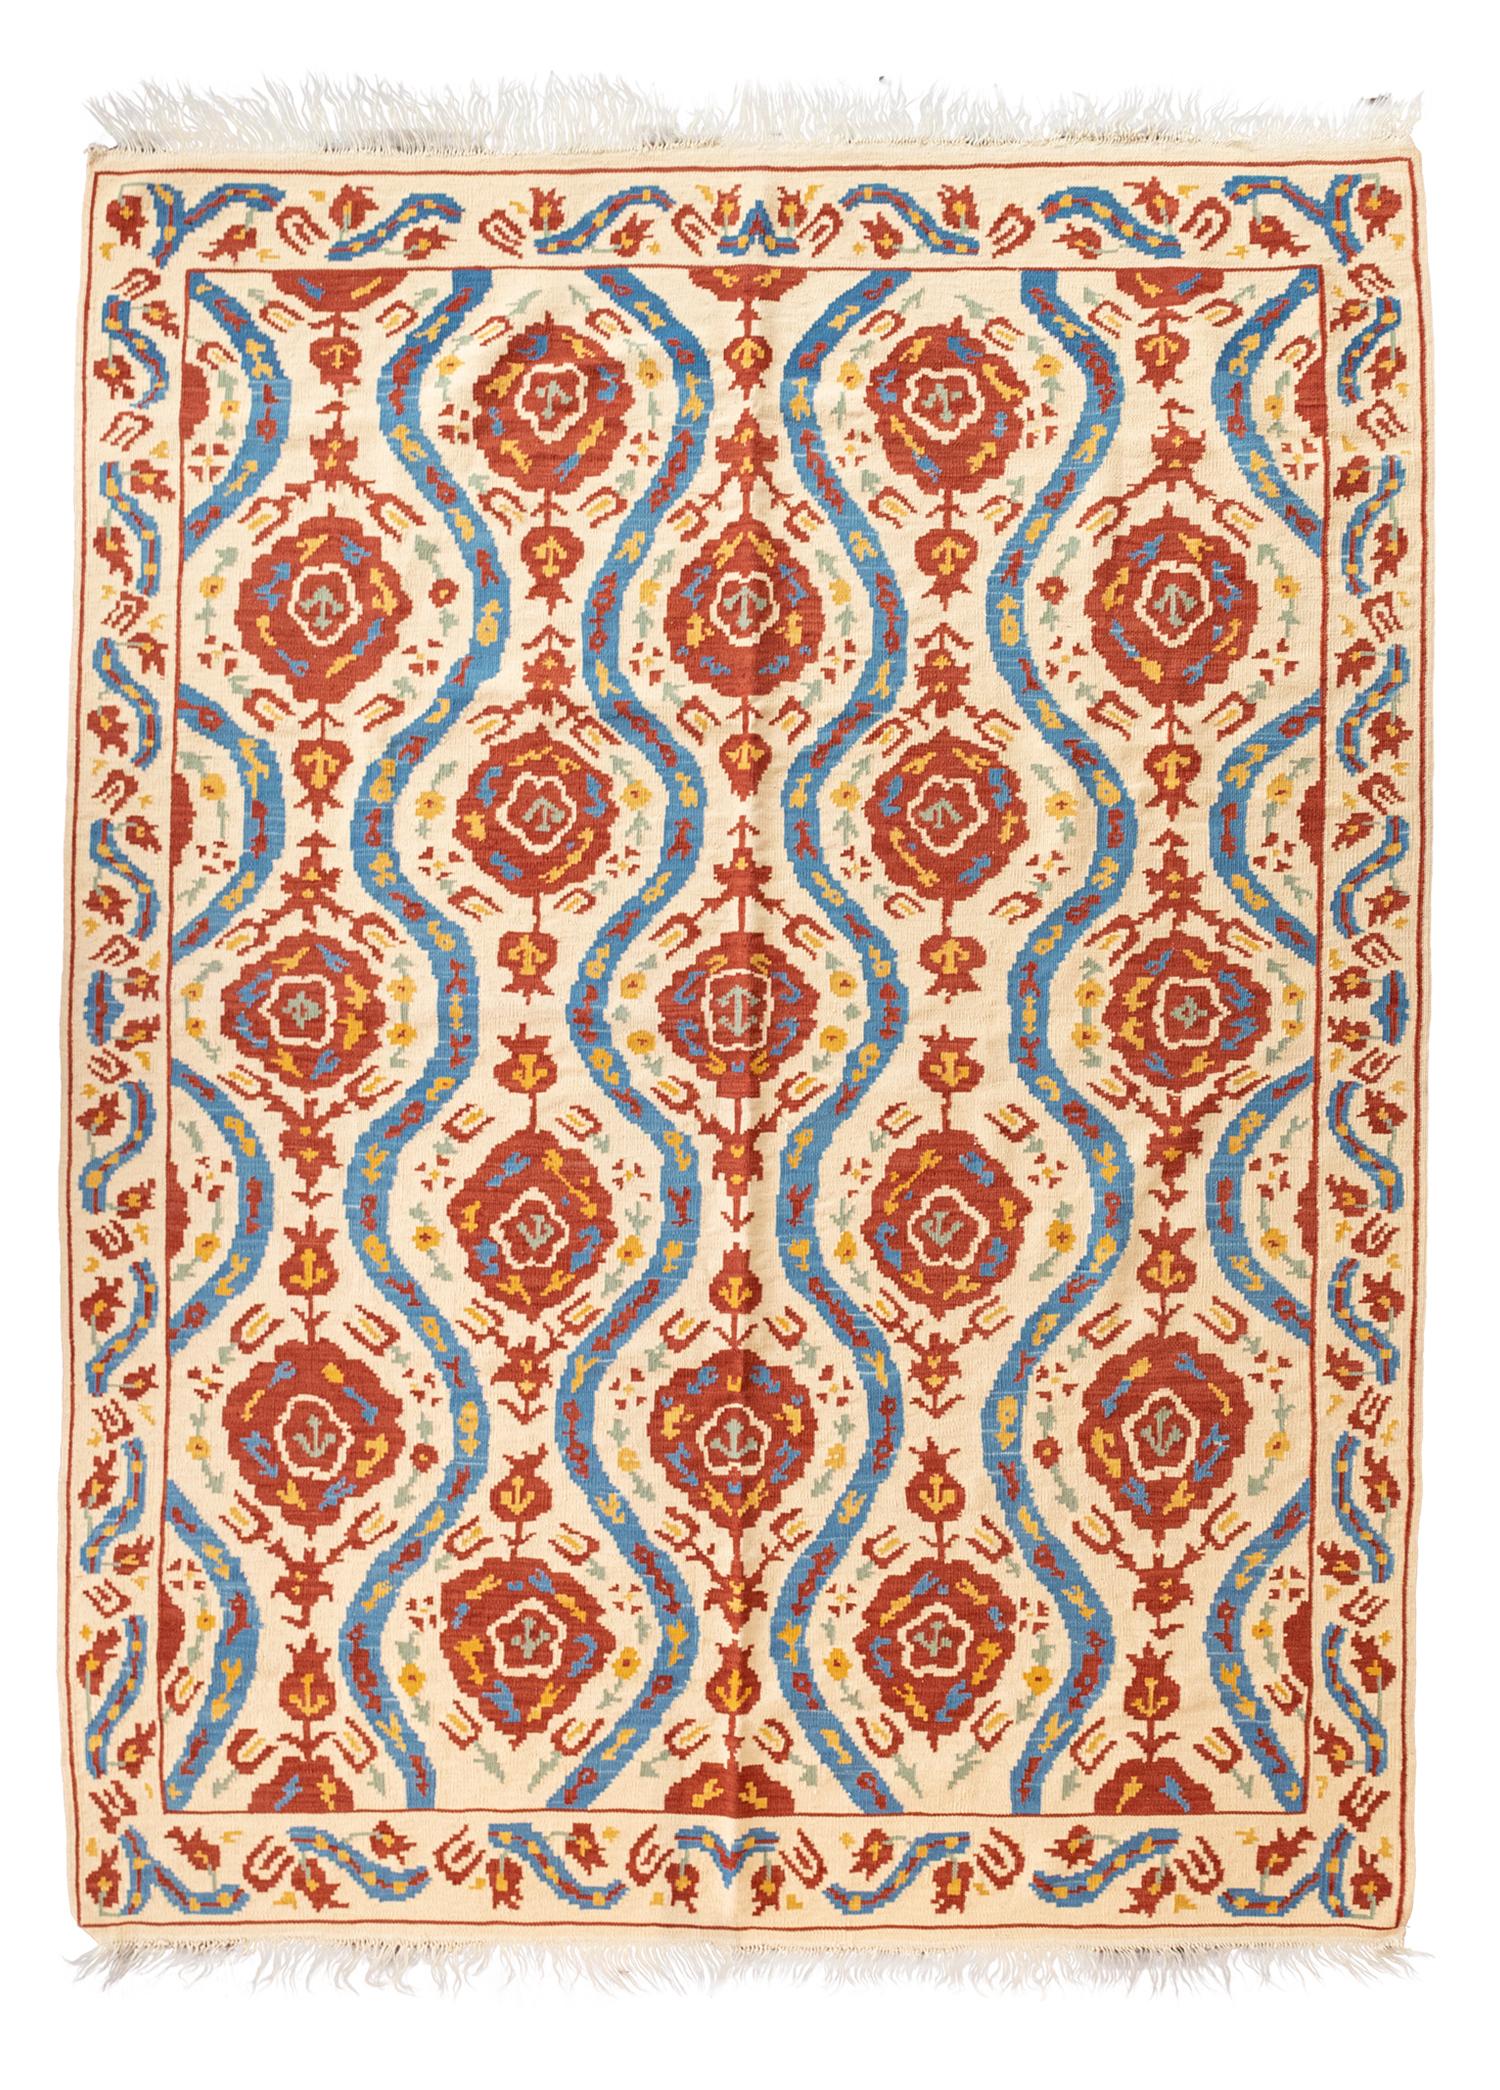 Klair Uzbek Patterned Hand Woven Wool Rug 170x224 cm